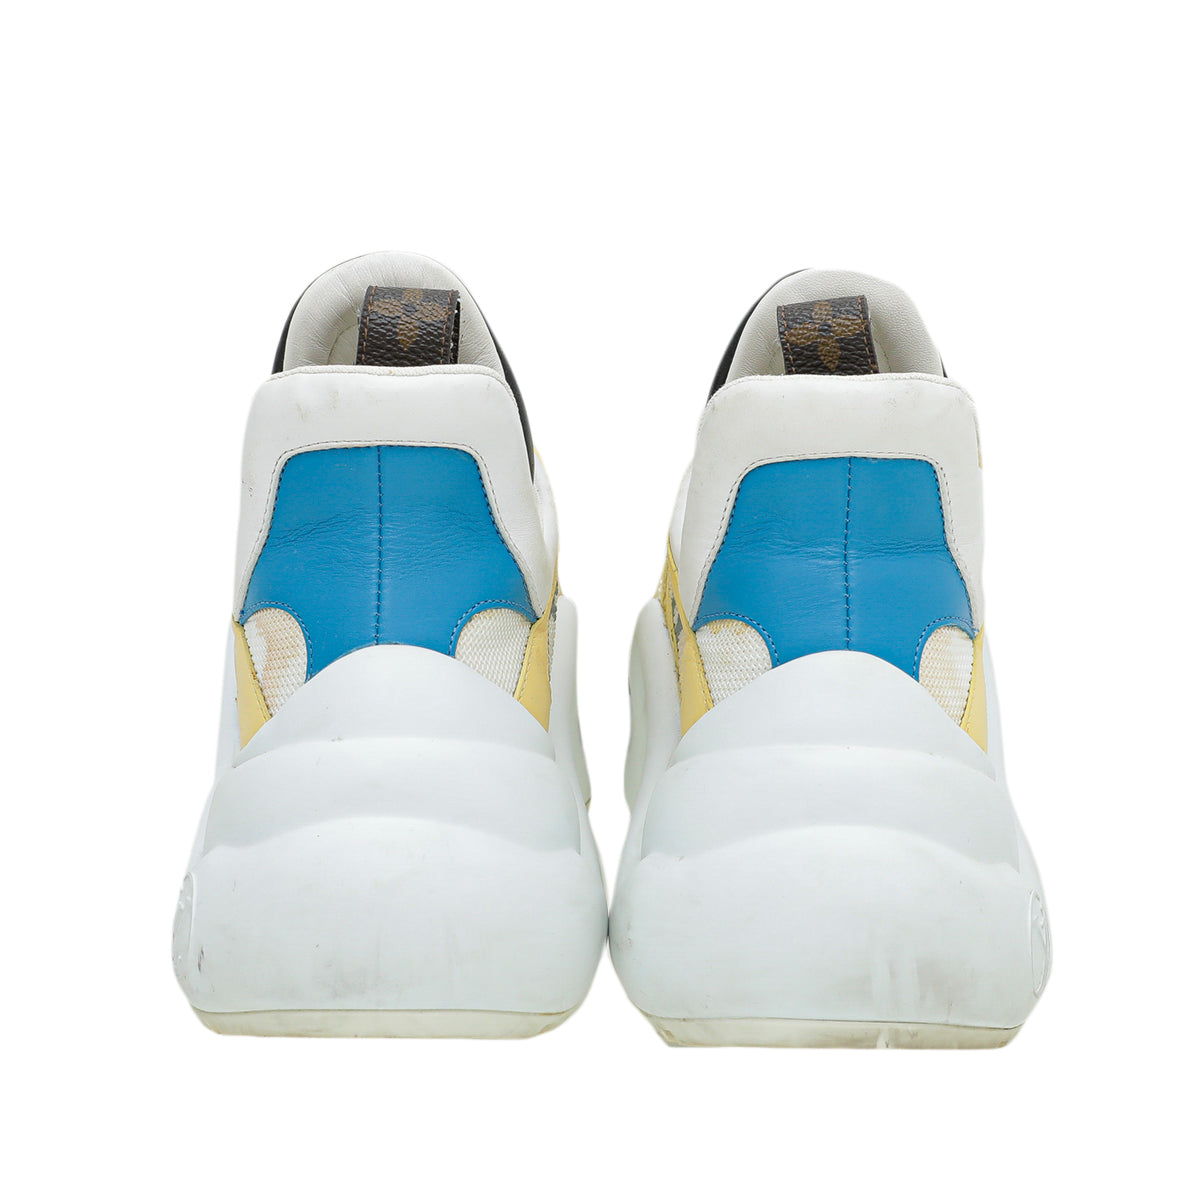 Louis Vuitton Archlight Sneakers, 37.5 - BOPF